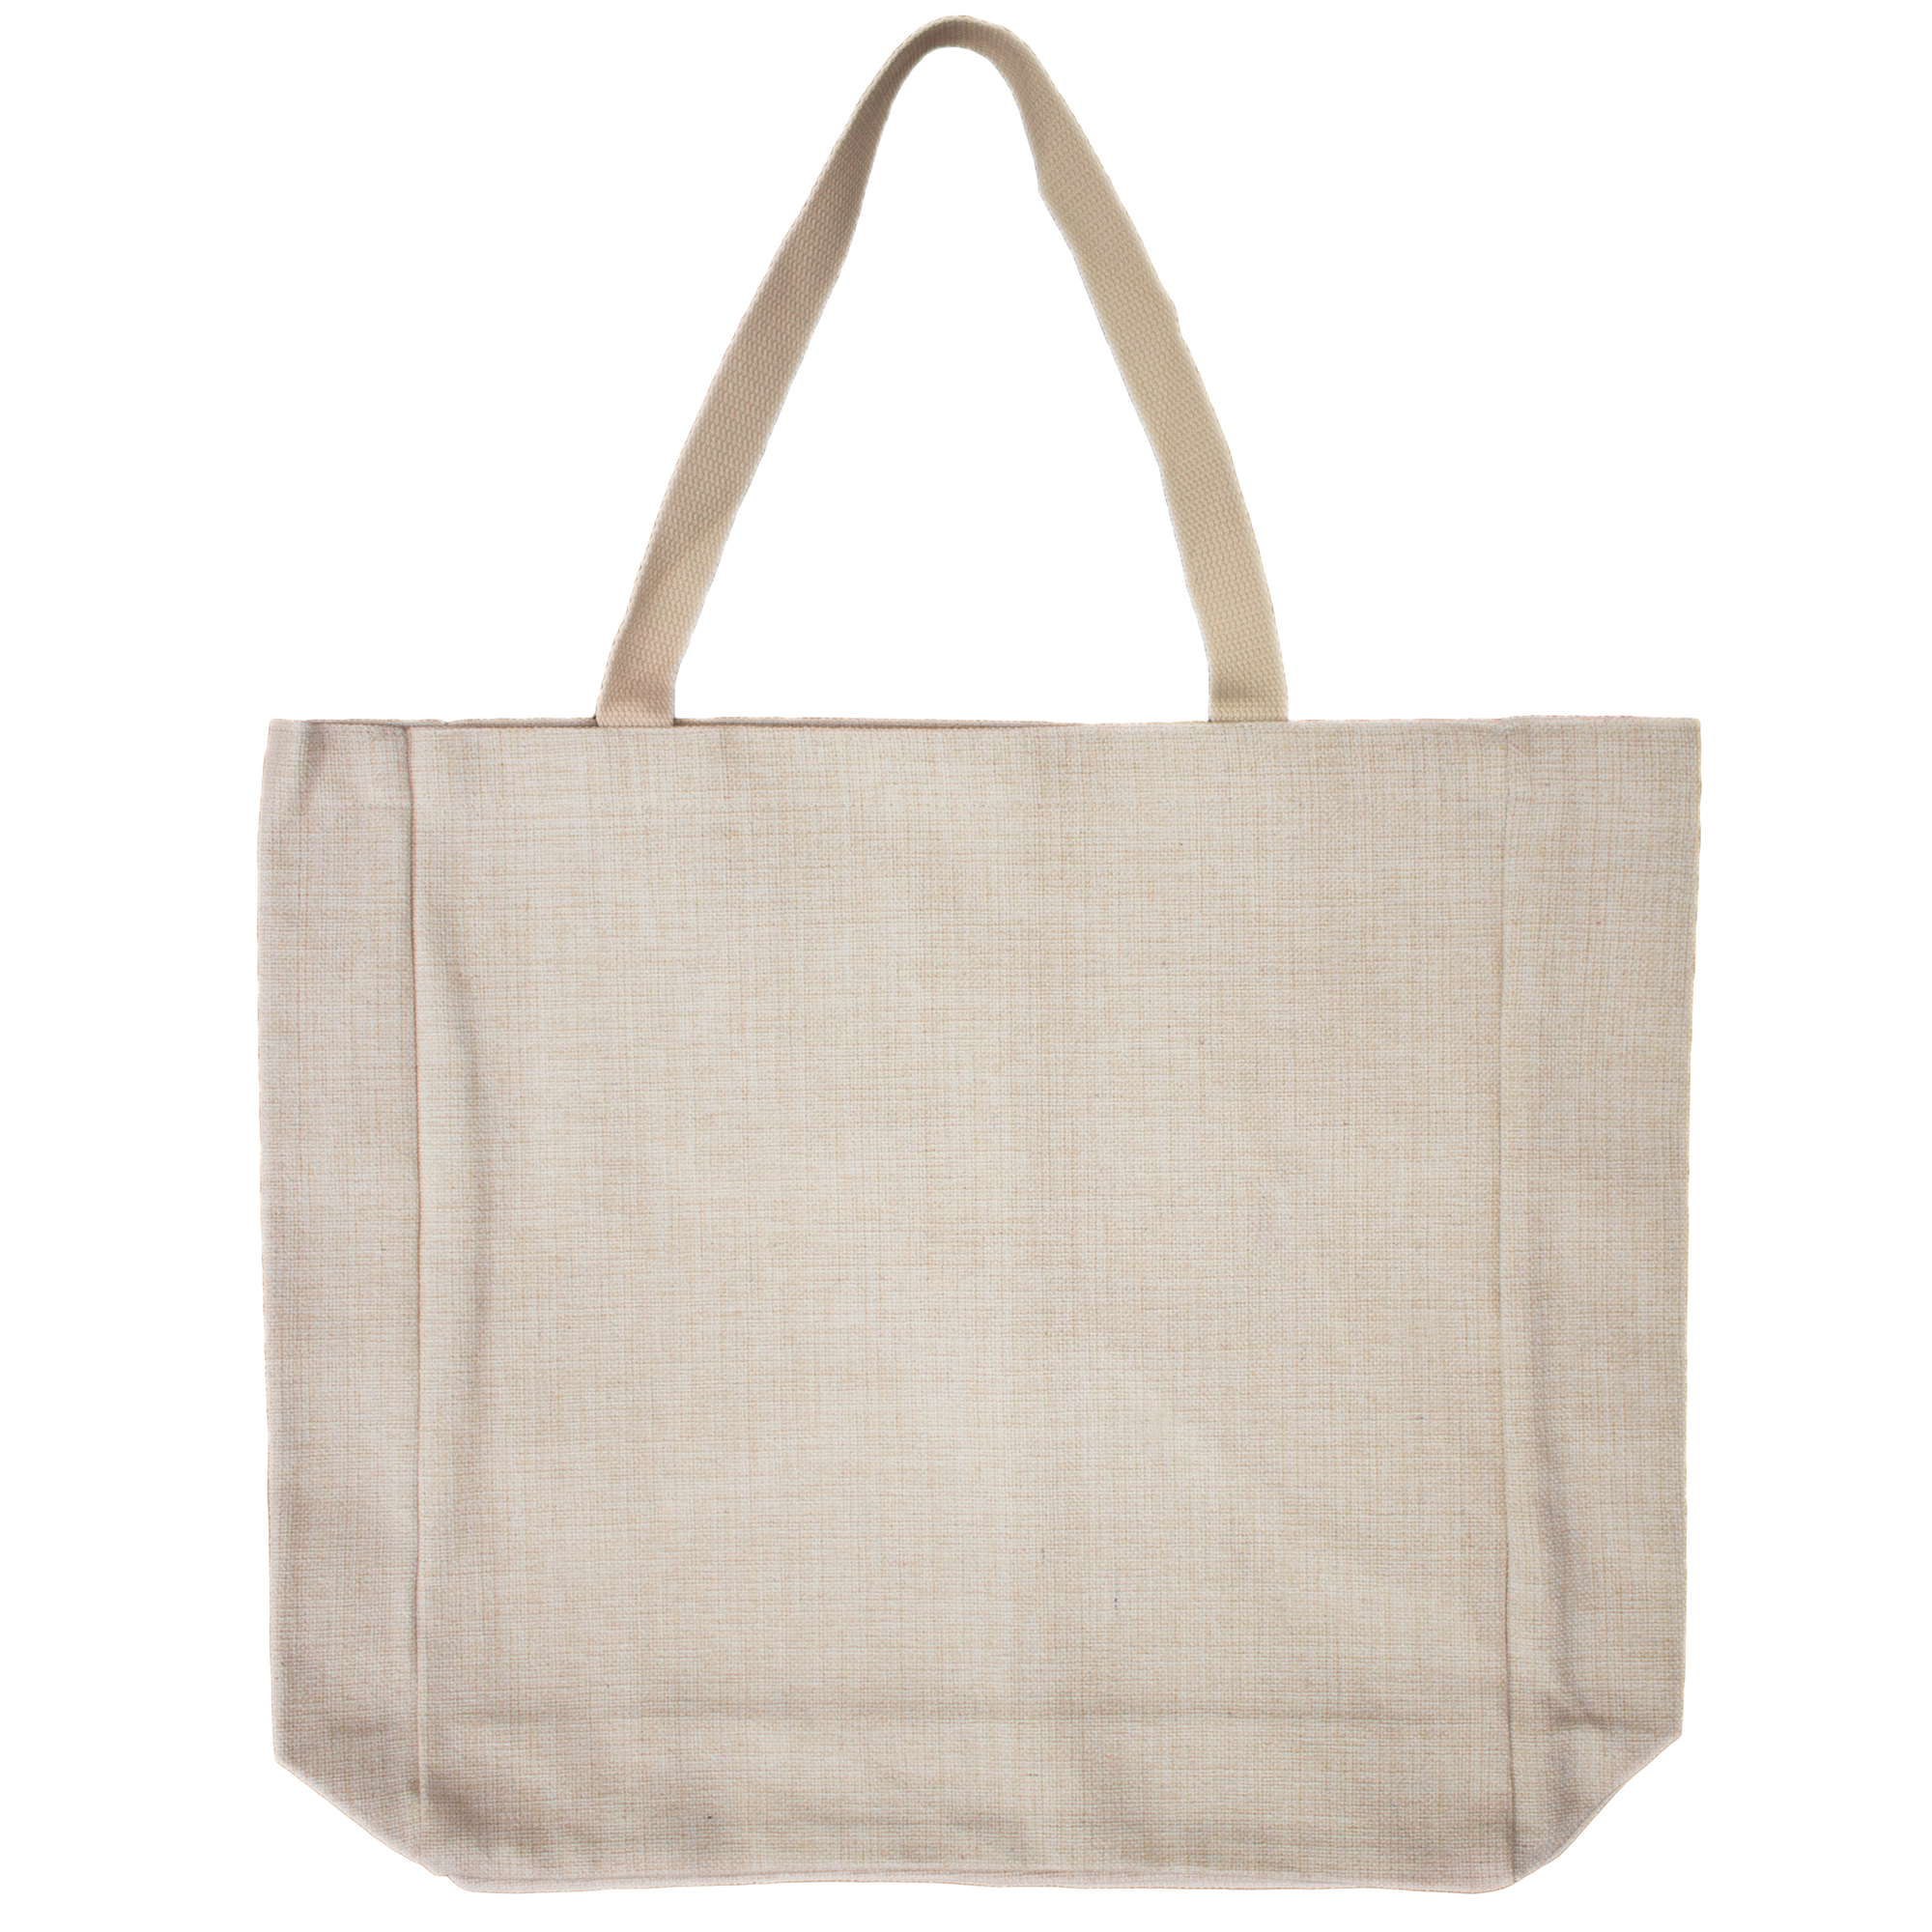 Blank/Customizable Large Linen Shopping Bag